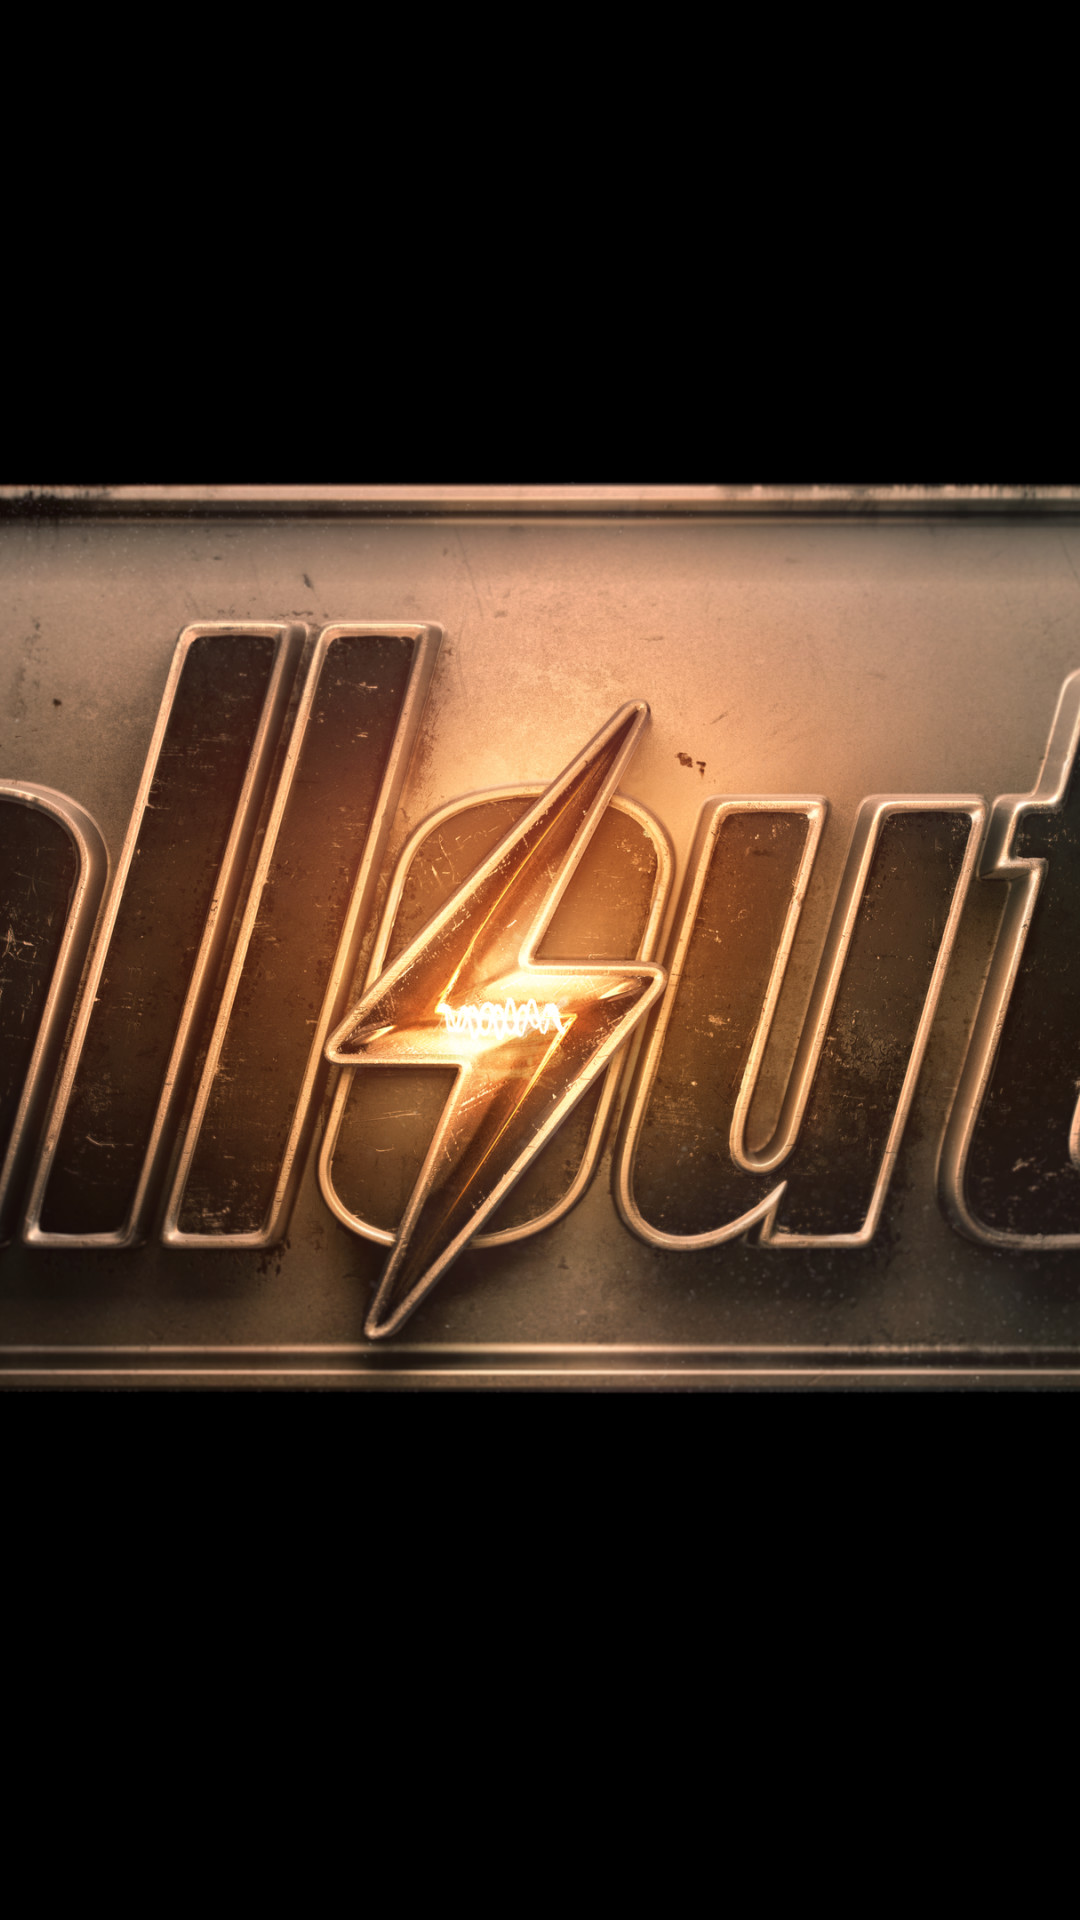 1080x1920 Fallout 4 Logo Wallpaper in 4k iPhone 6 Plus - Wallpaper - HD .